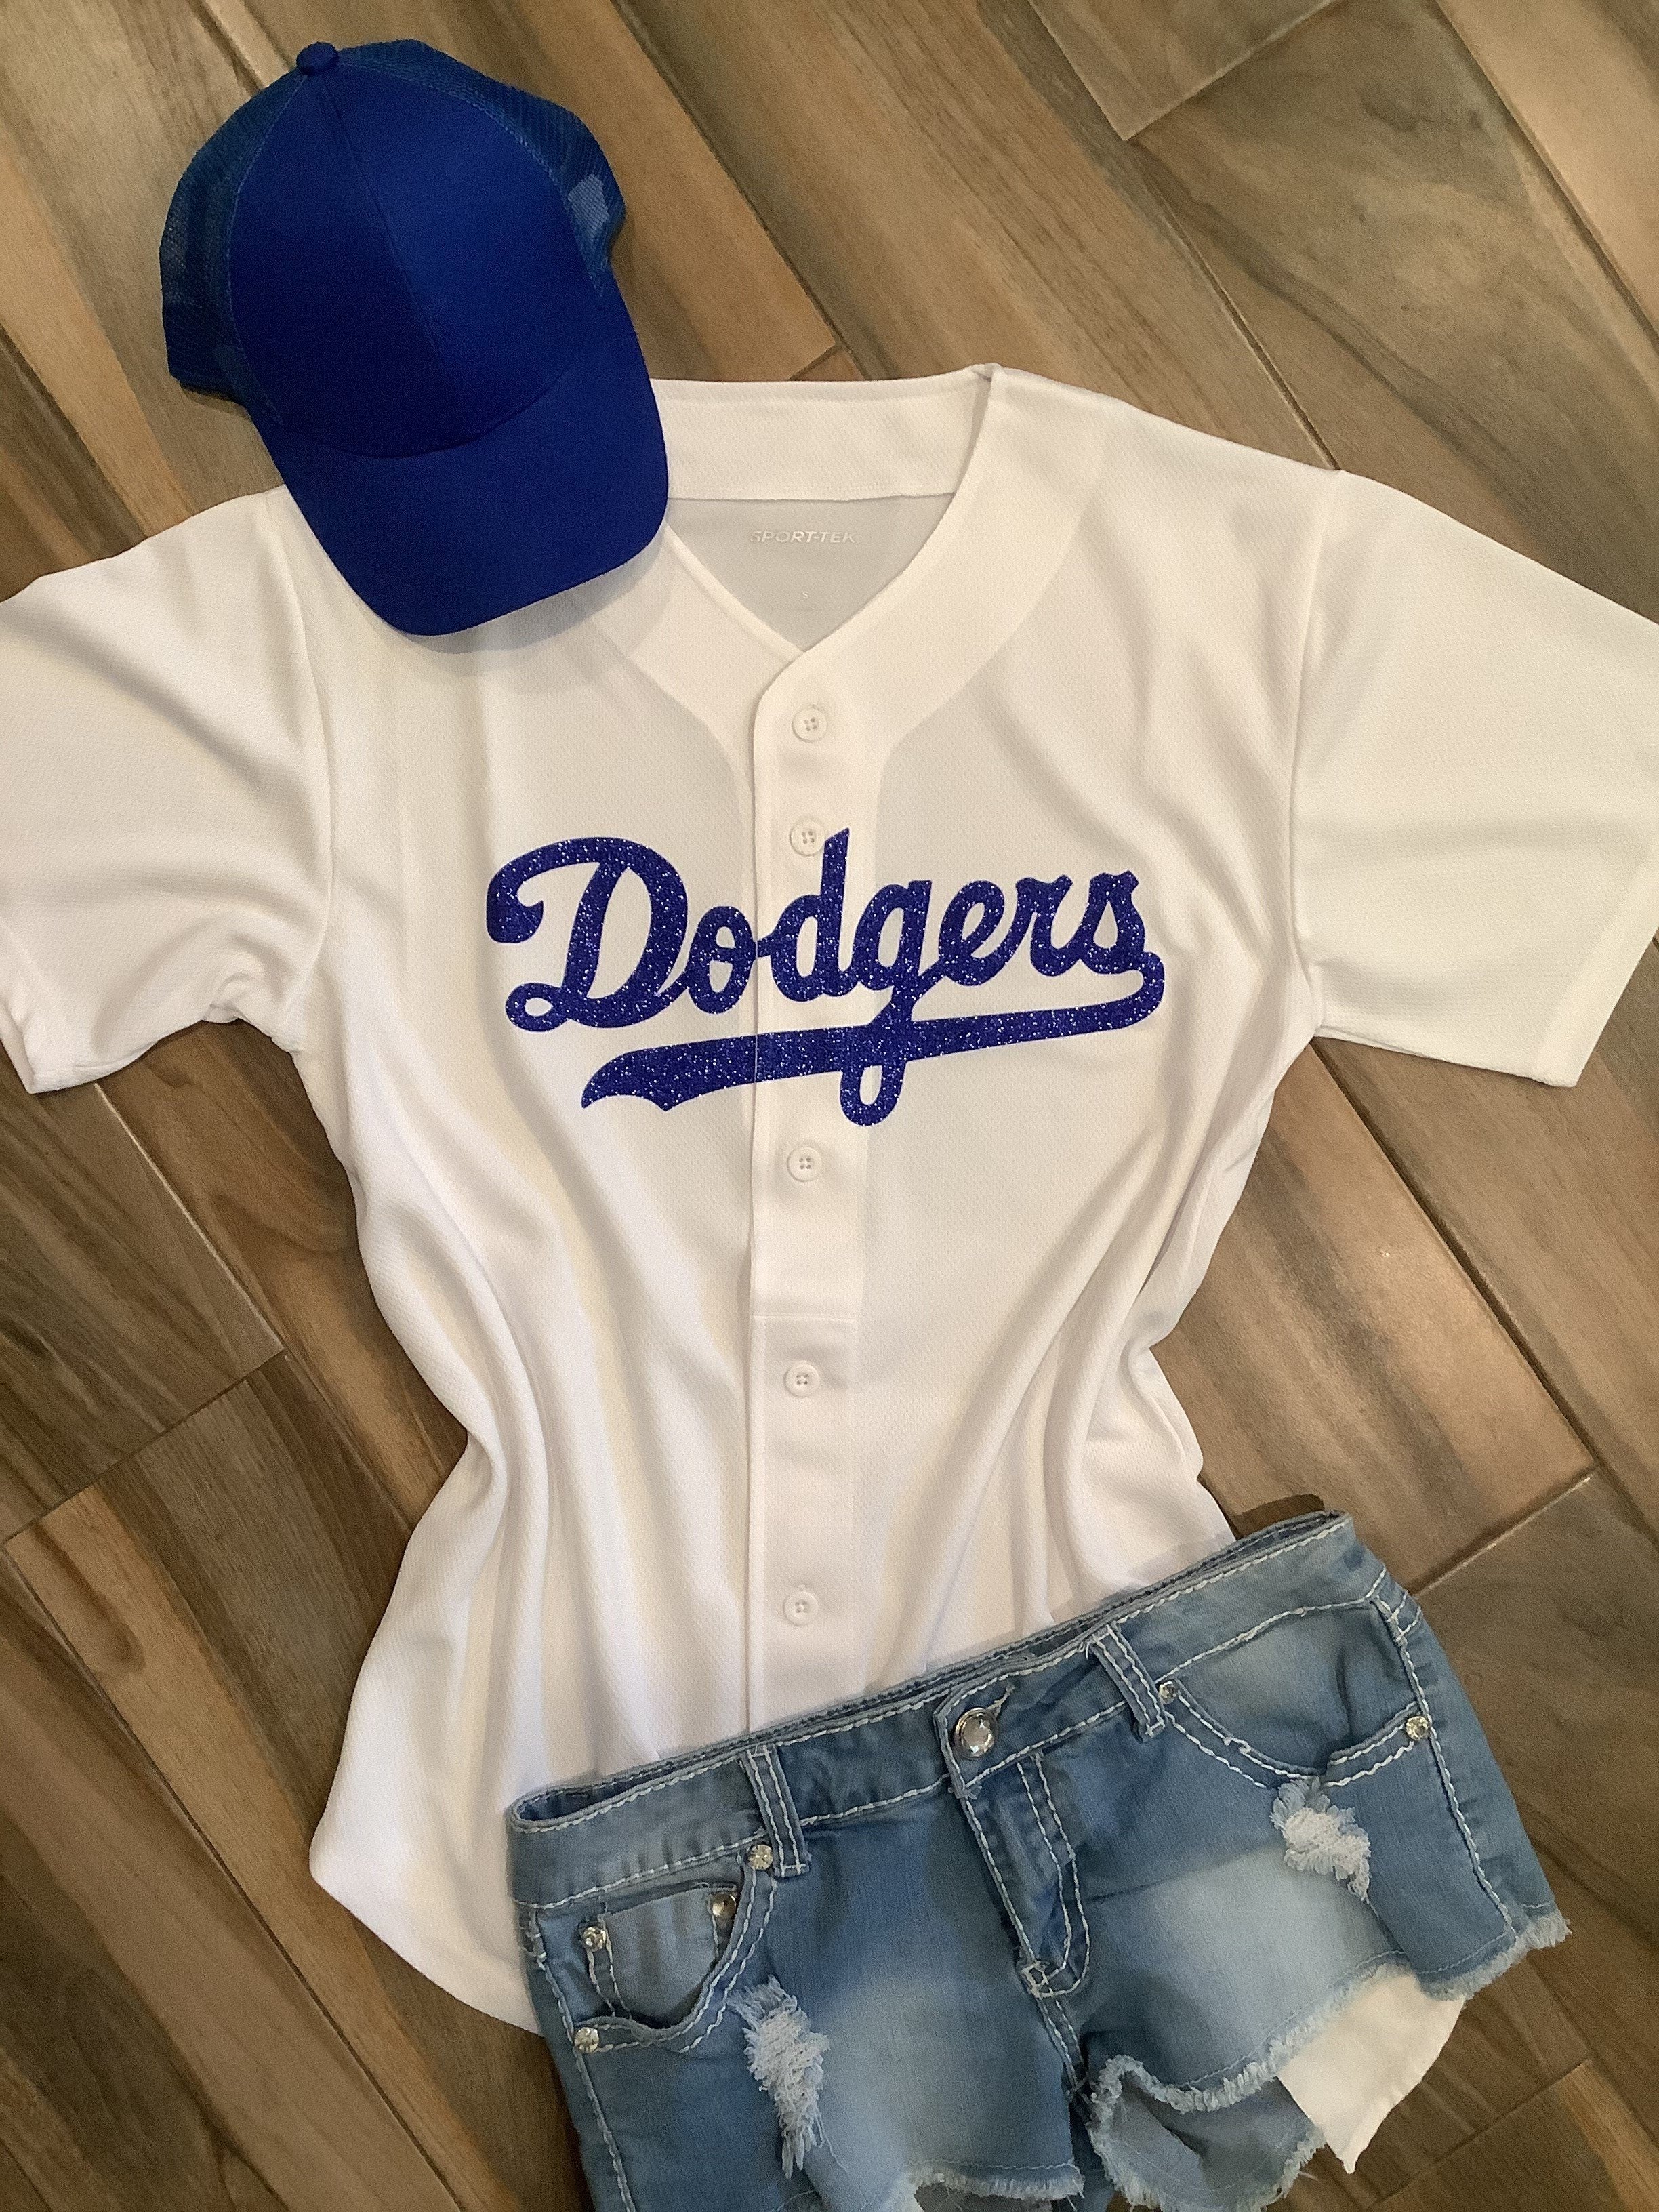 L.A. Dodgers Baseball Jerseys, Dodgers Jerseys, Authentic Dodgers Jersey